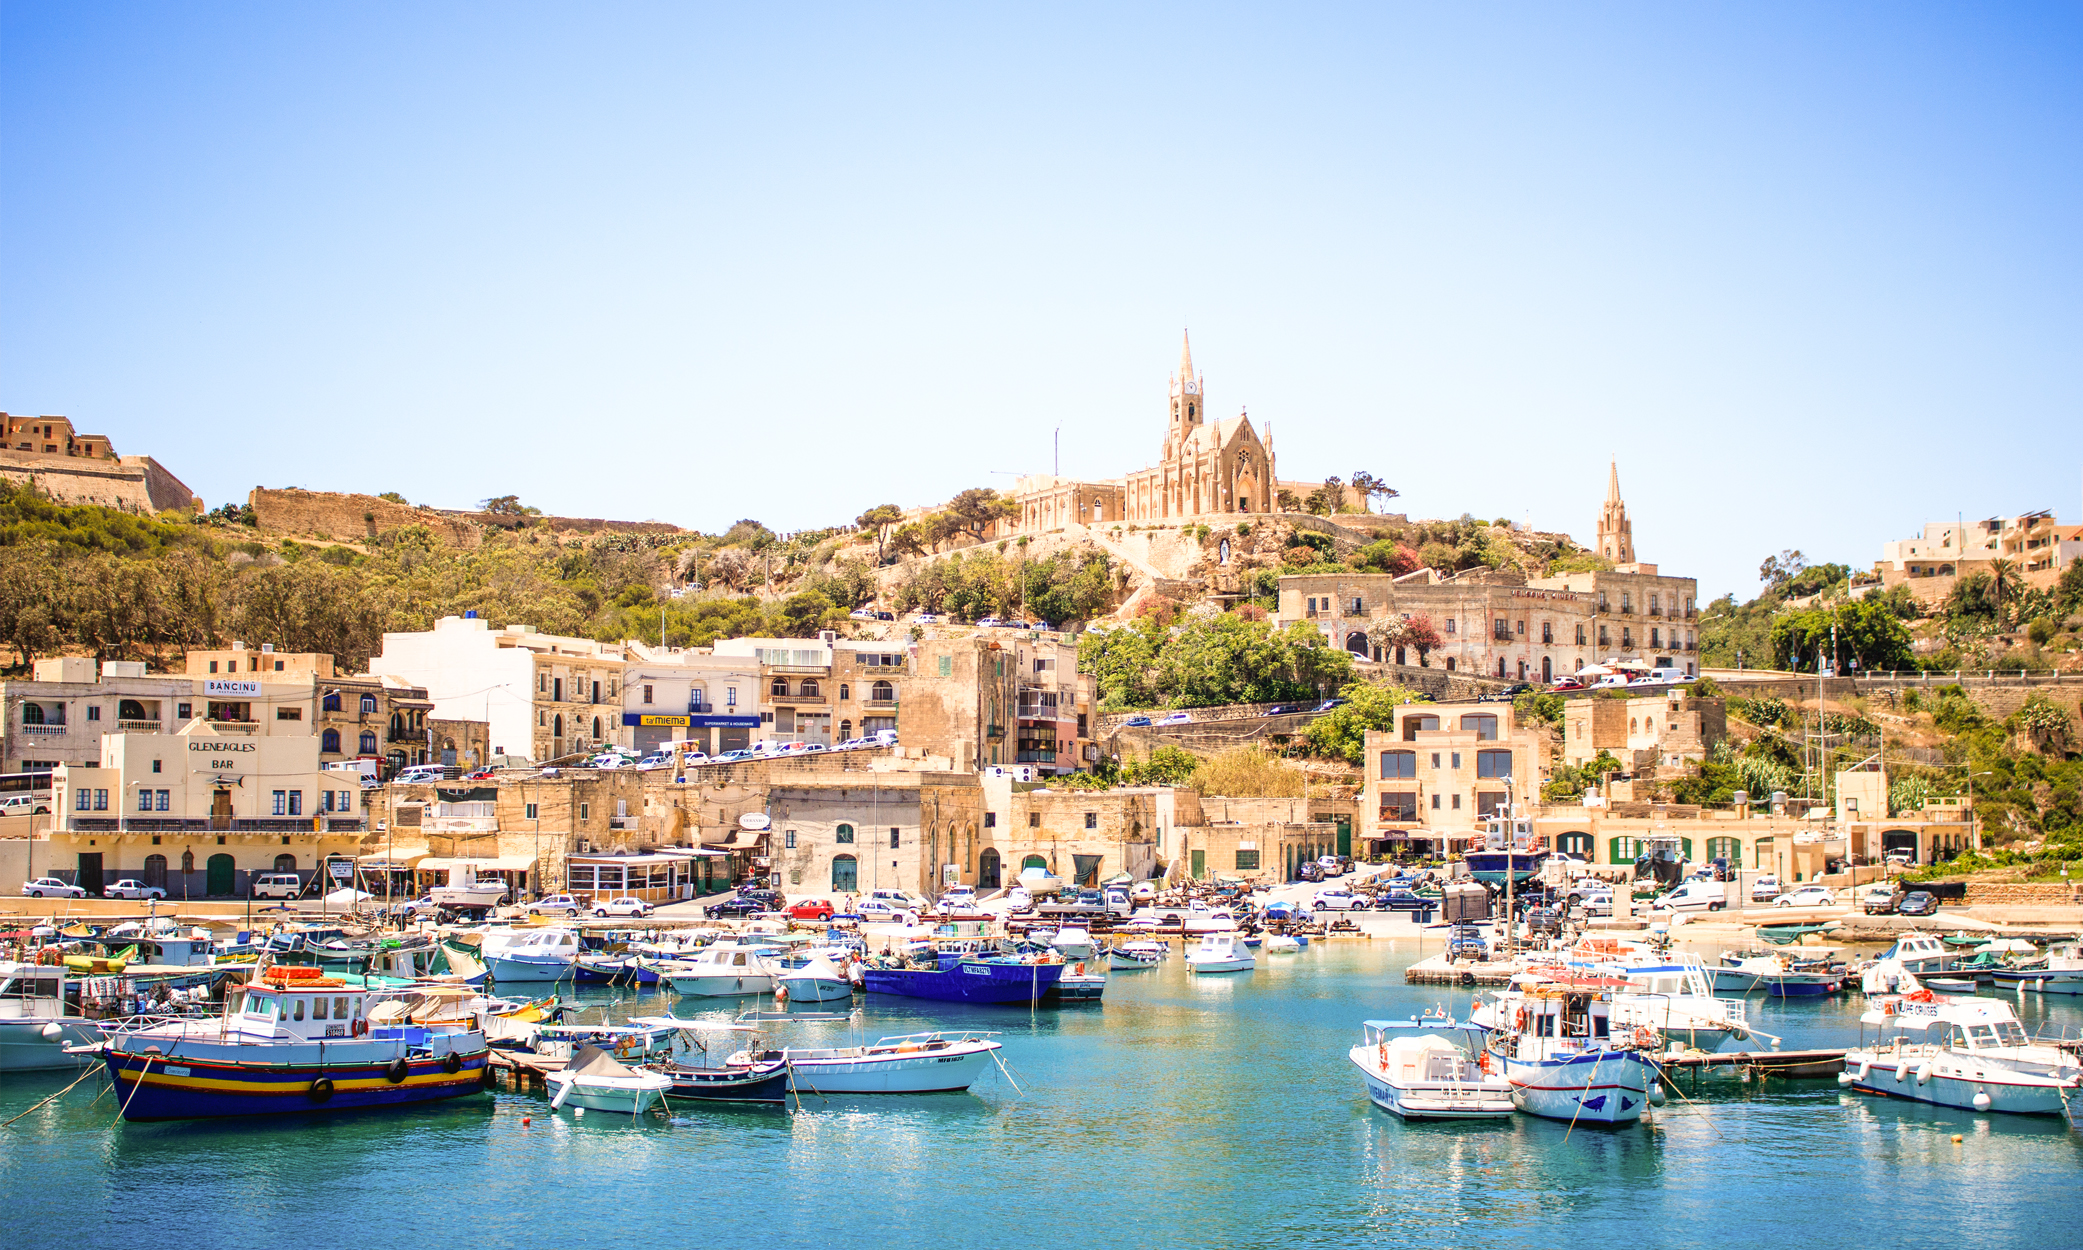 Entrepreneurs to Obtain Permanent Residence in Malta through a New Programme